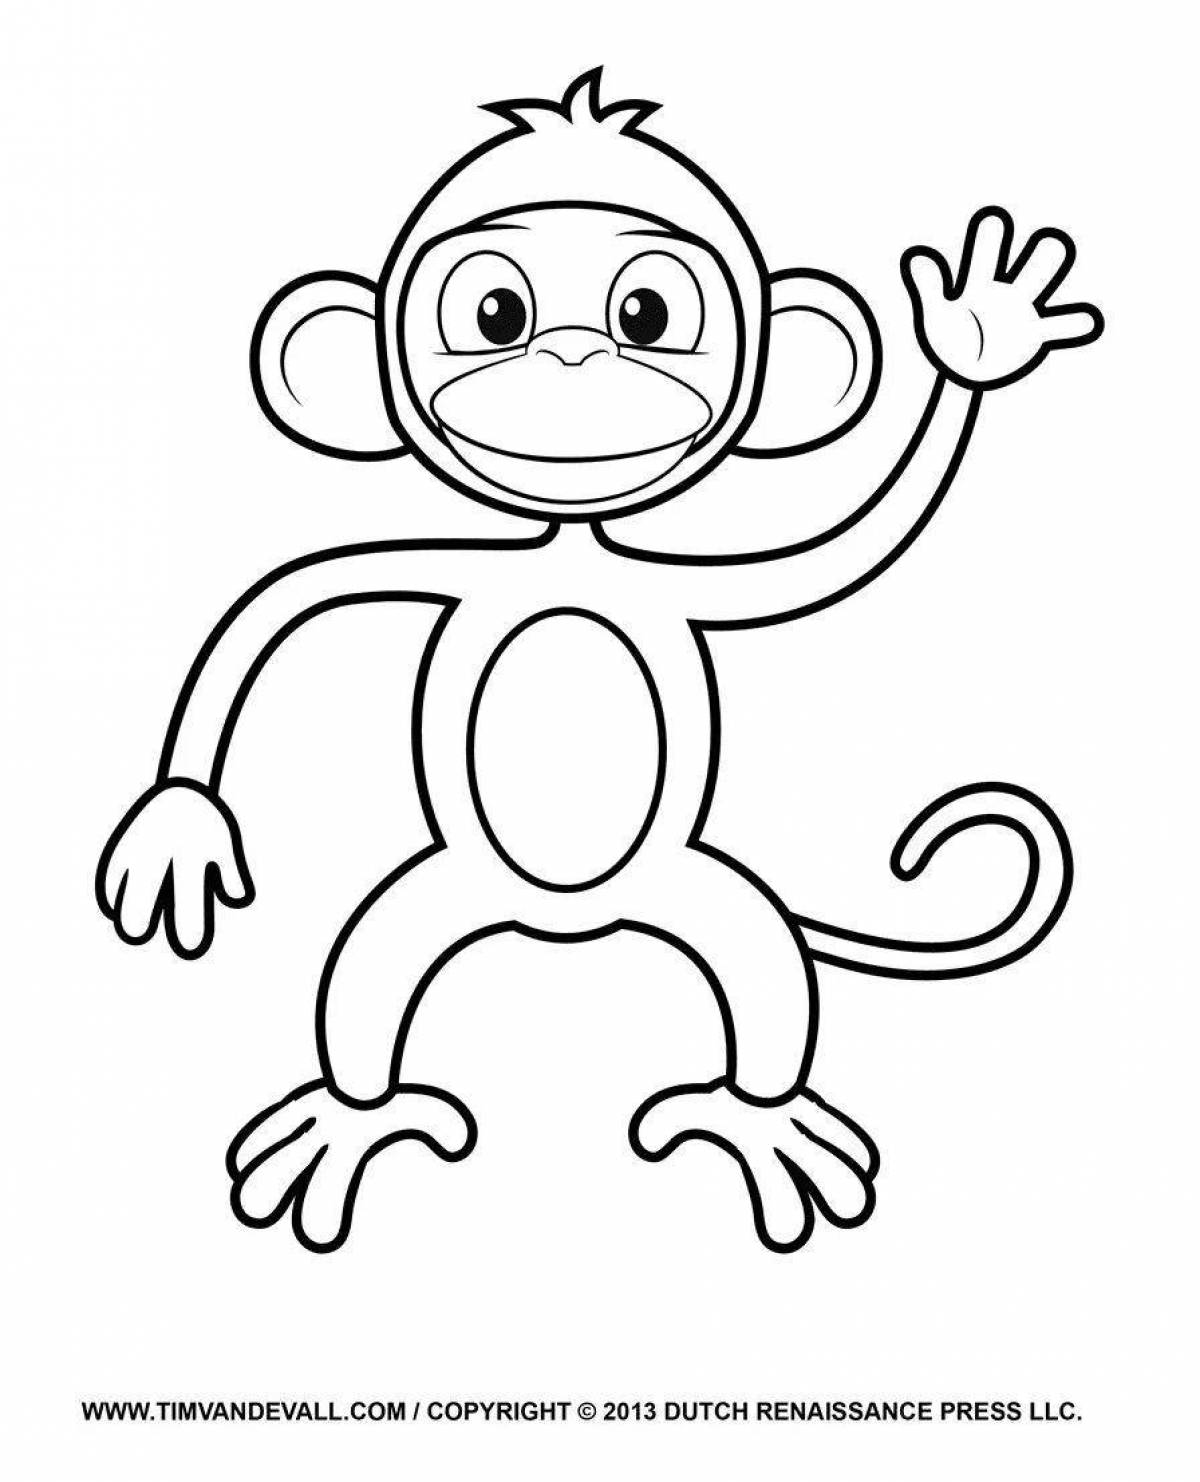 Magic monkey coloring book